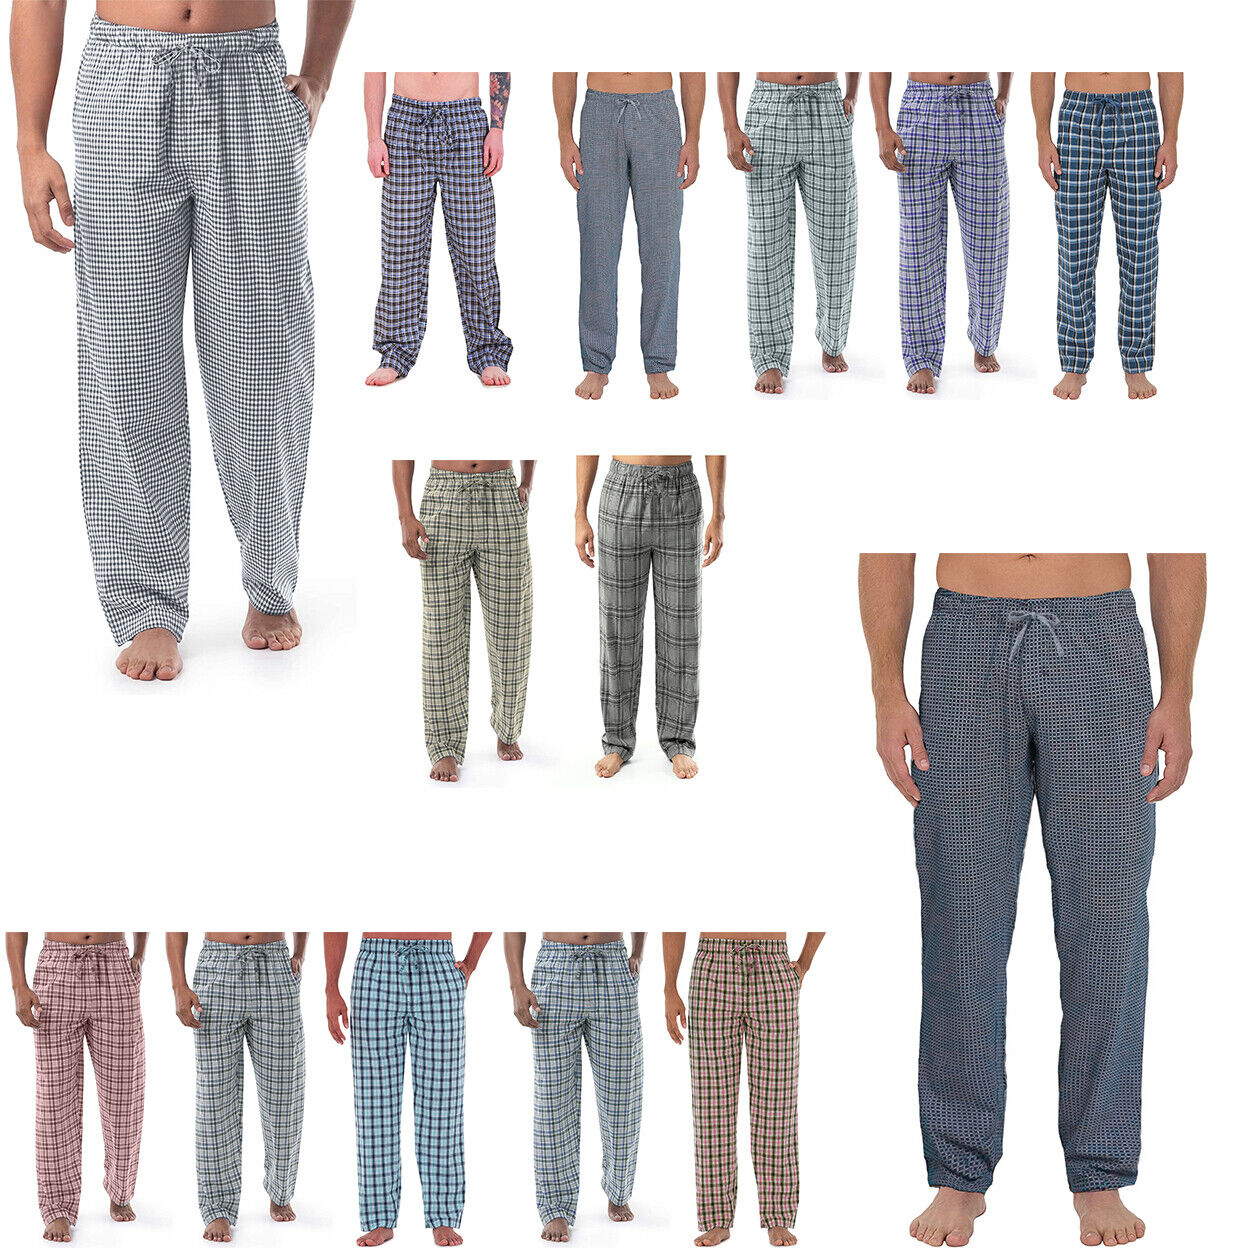 Men's Ultra-Soft Solid & Plaid Cotton Jersey Knit Comfy Sleep Lounge Pajama Pants - Plaid, Xx-large